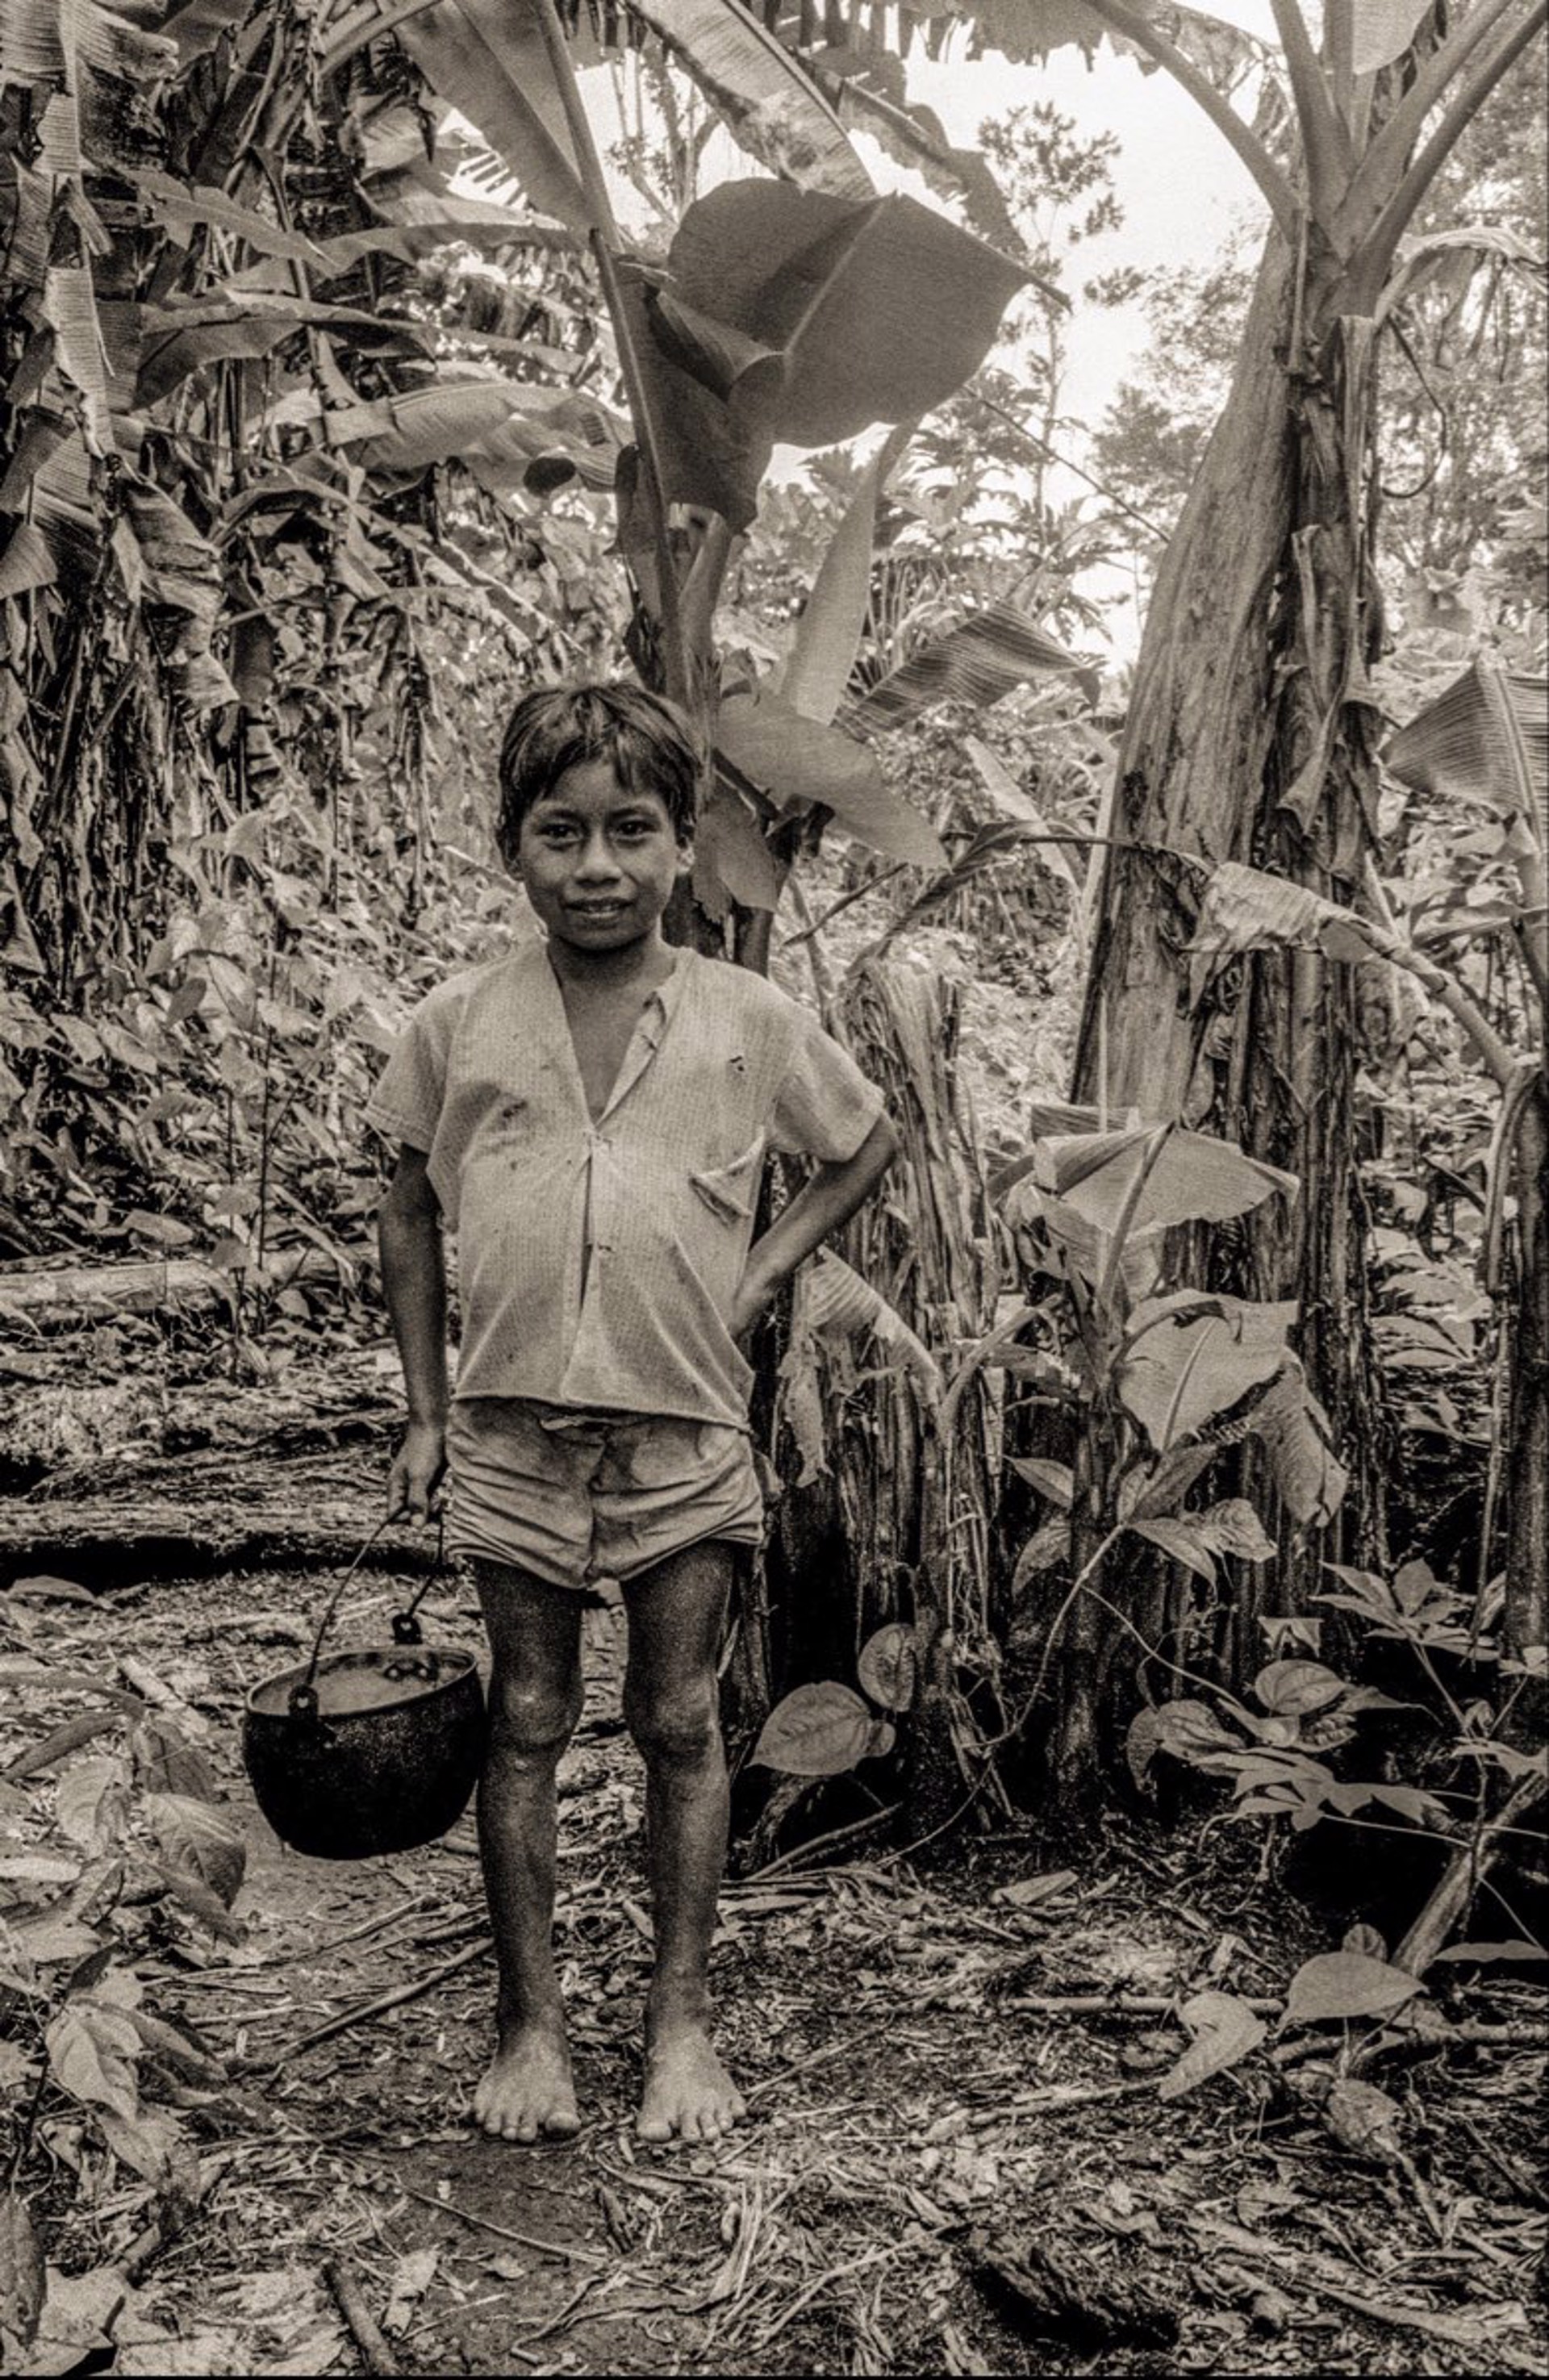 Boy in the Rainforest, Unframed (022) by Jack Dempsey